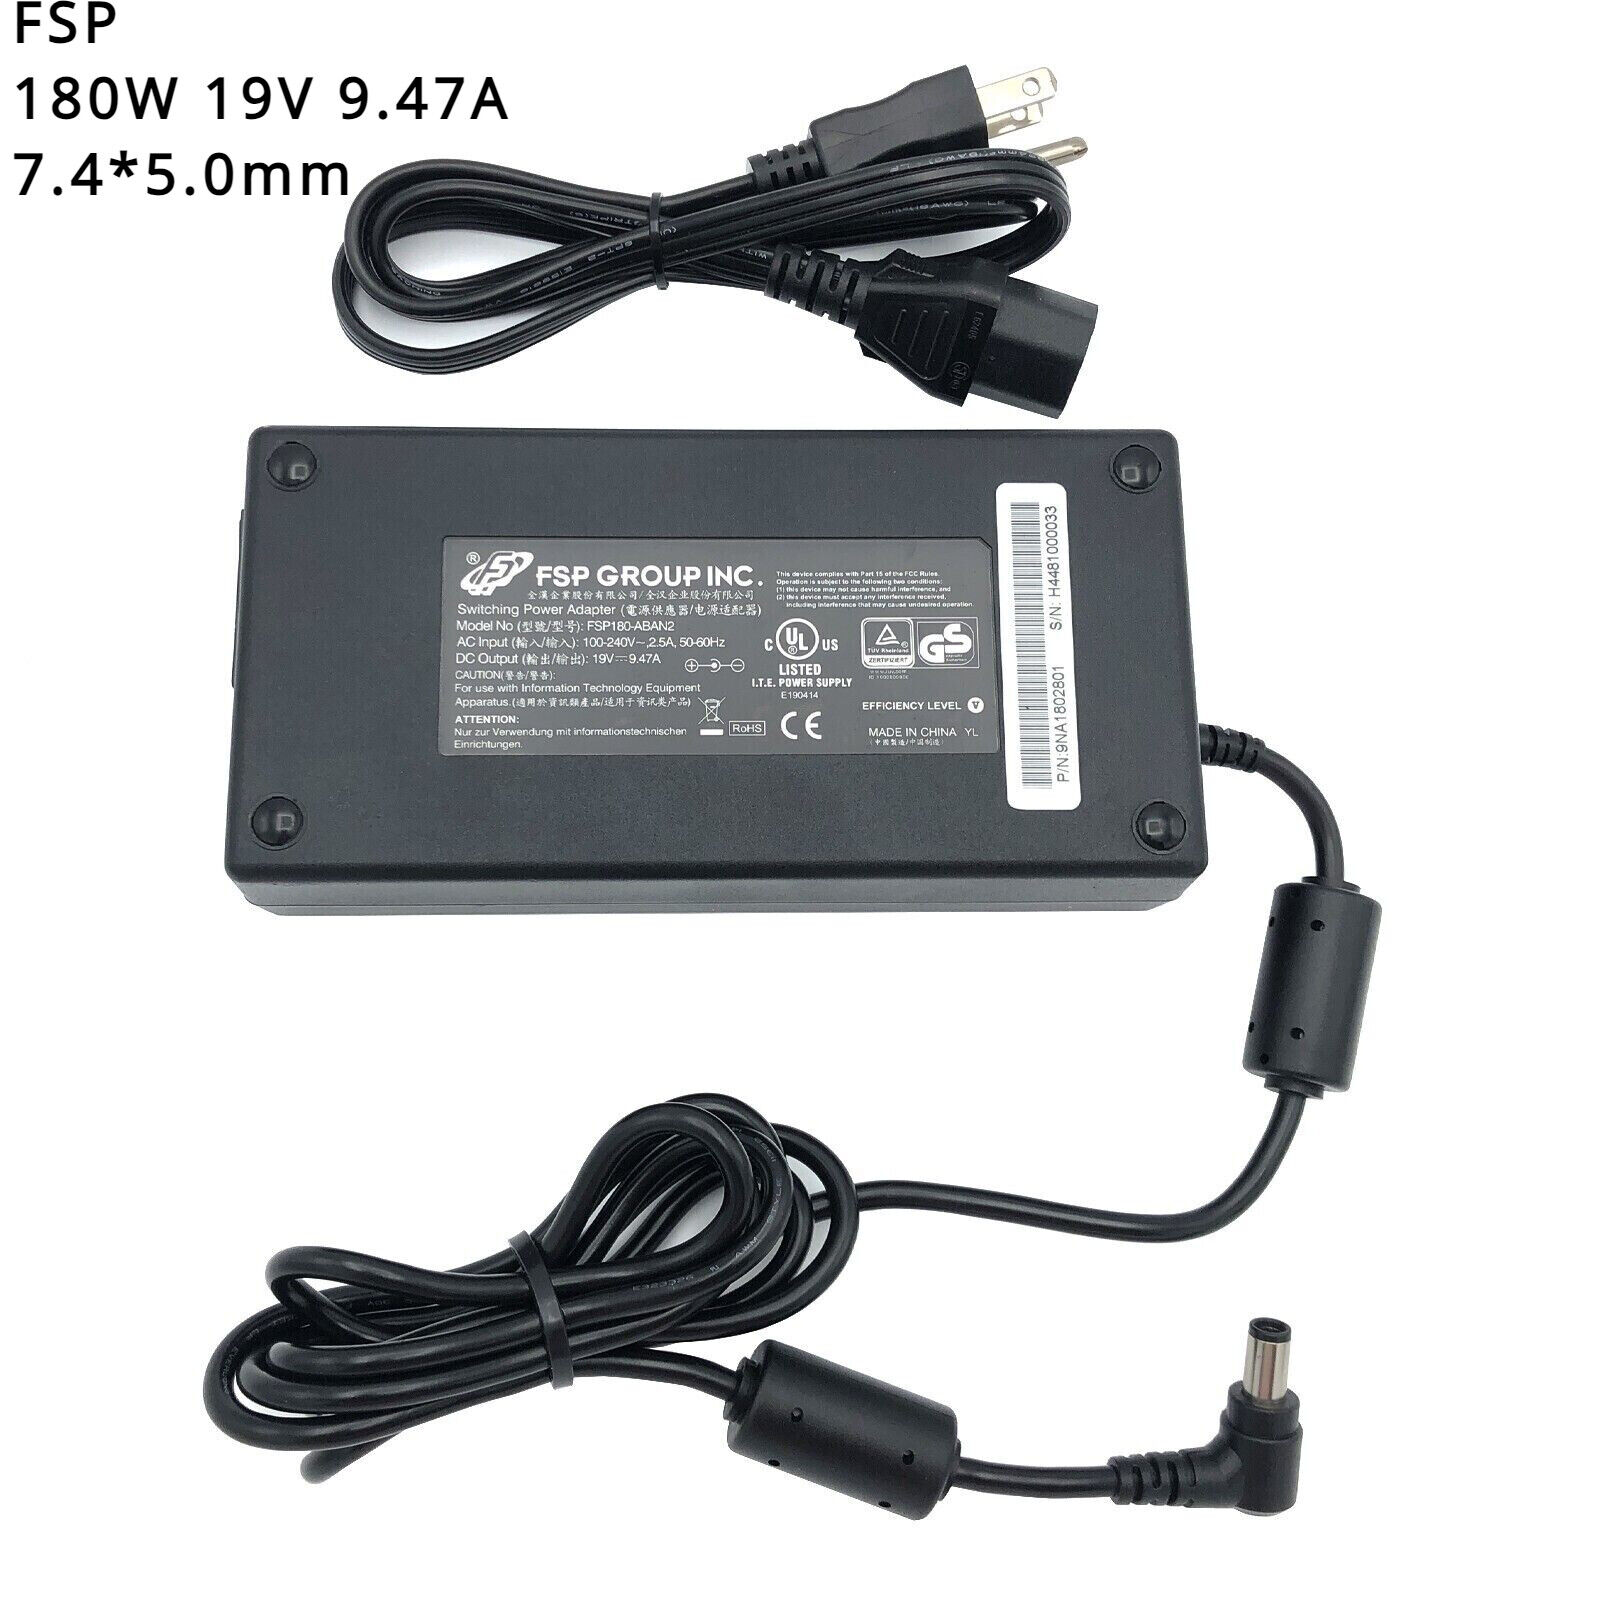 Original FSP 19V 9.47A 180W AC/DC Switching Power Adapter FSP180-ABAN2 7.4*5.0mm